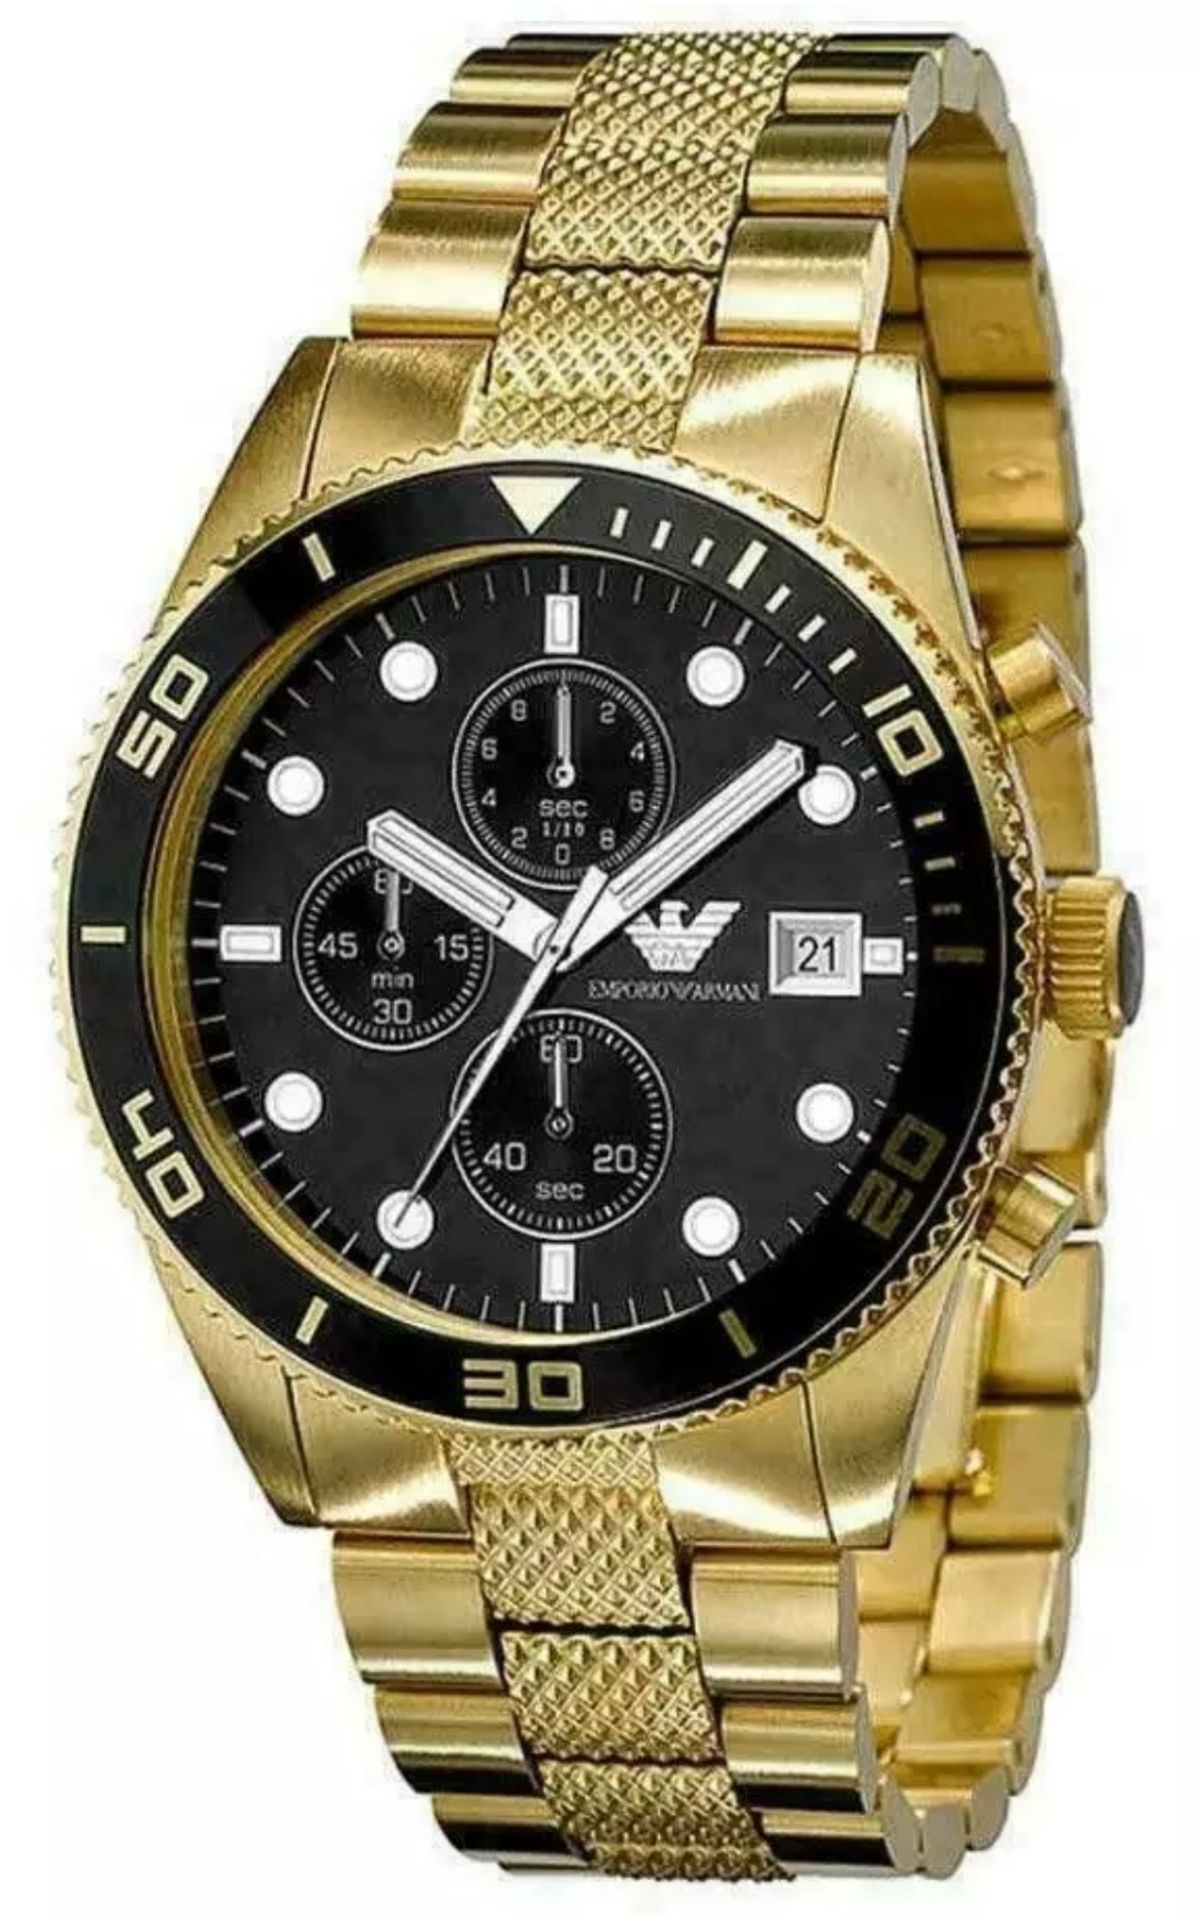 Emporio Armani AR5857 Black Dial Gold Tone Bracelet Quartz Chronograph Watch - Image 2 of 10